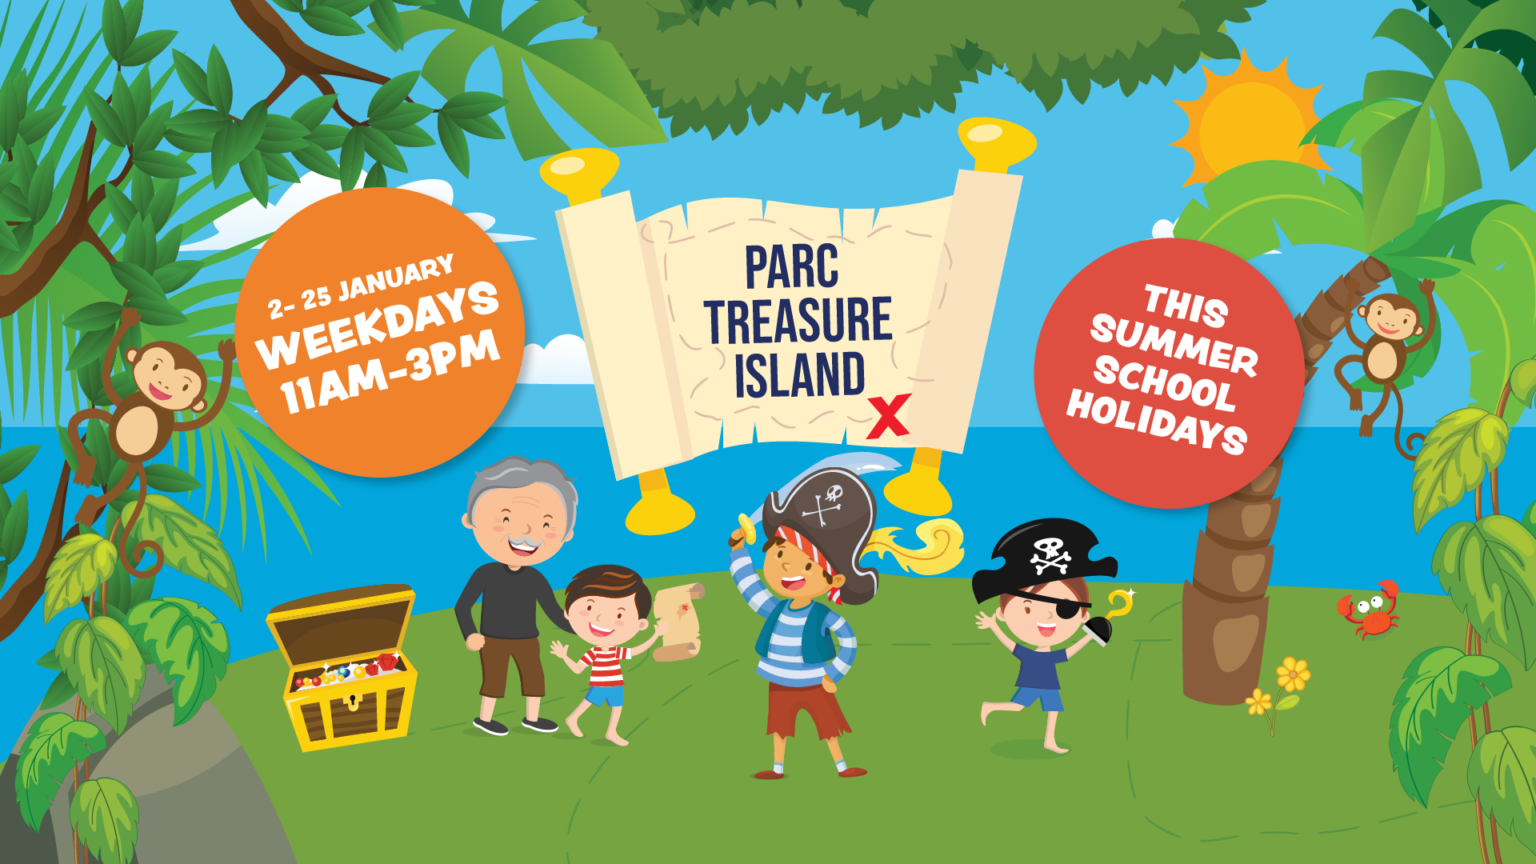 MK Nov PARC Treasure Island Facebook Event 1 1536x864 